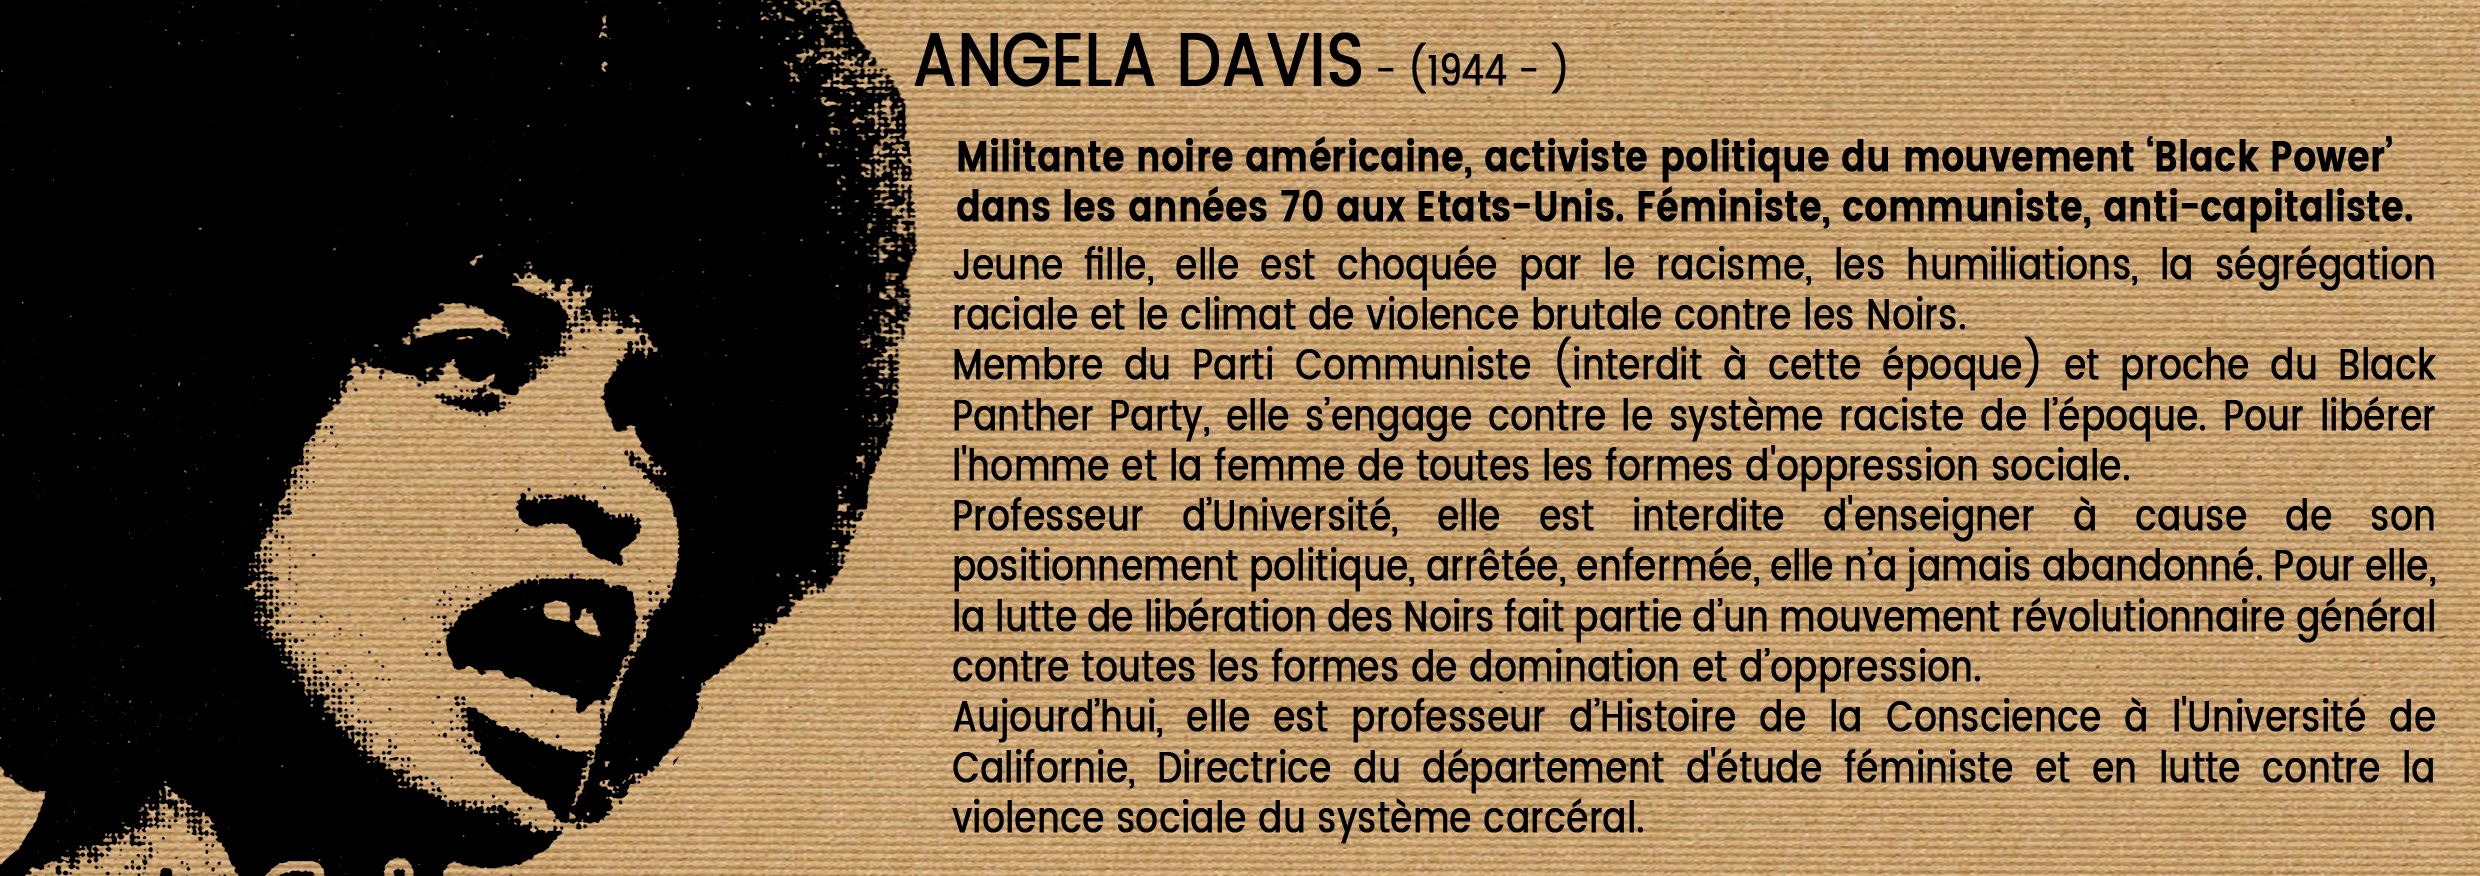 Angela Davis Histoire